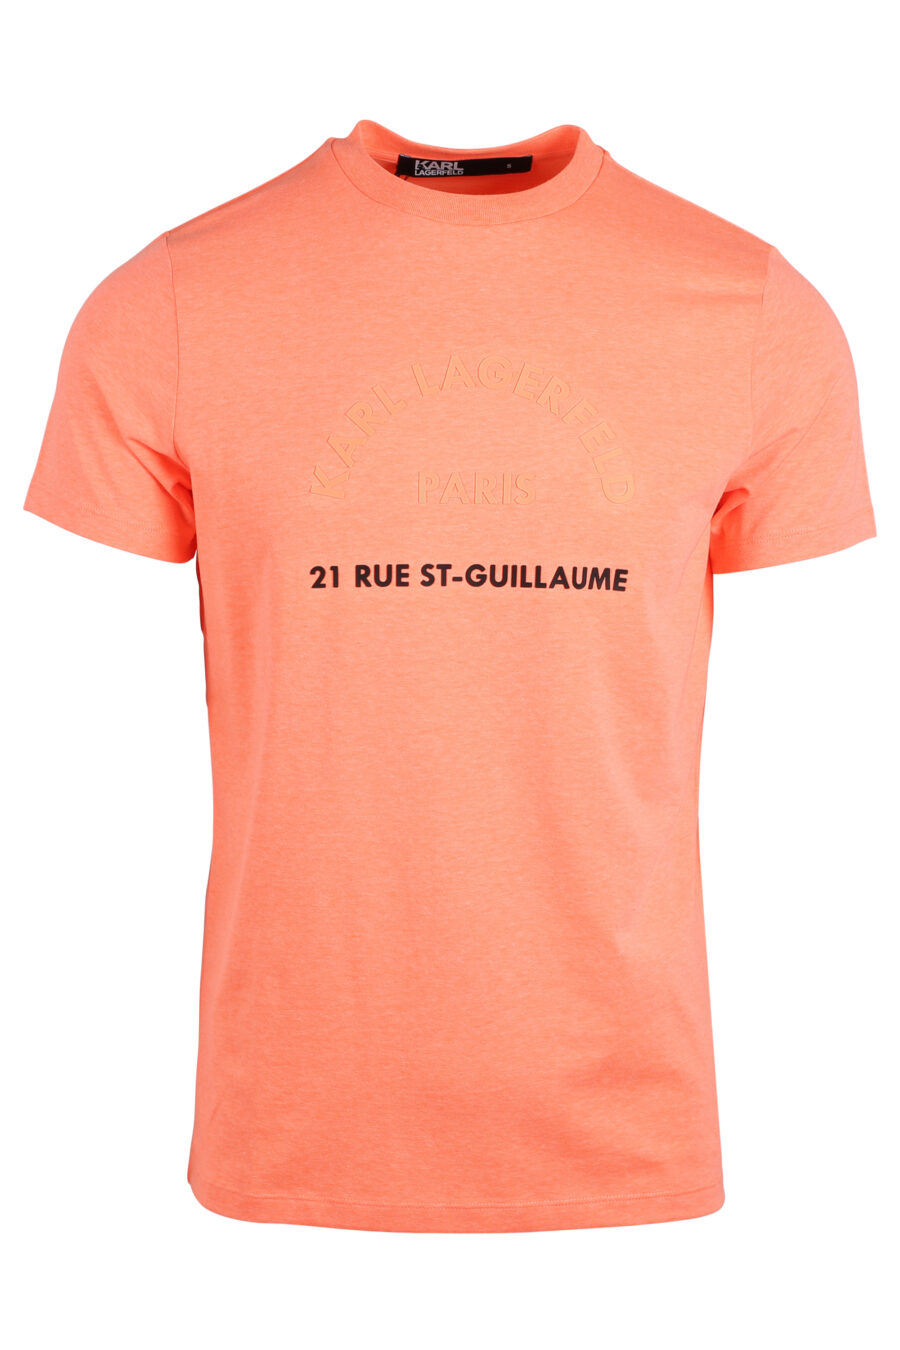 Camiseta naranja con maxilogo "rue st guillaume" negro y naranja - IMG 4741